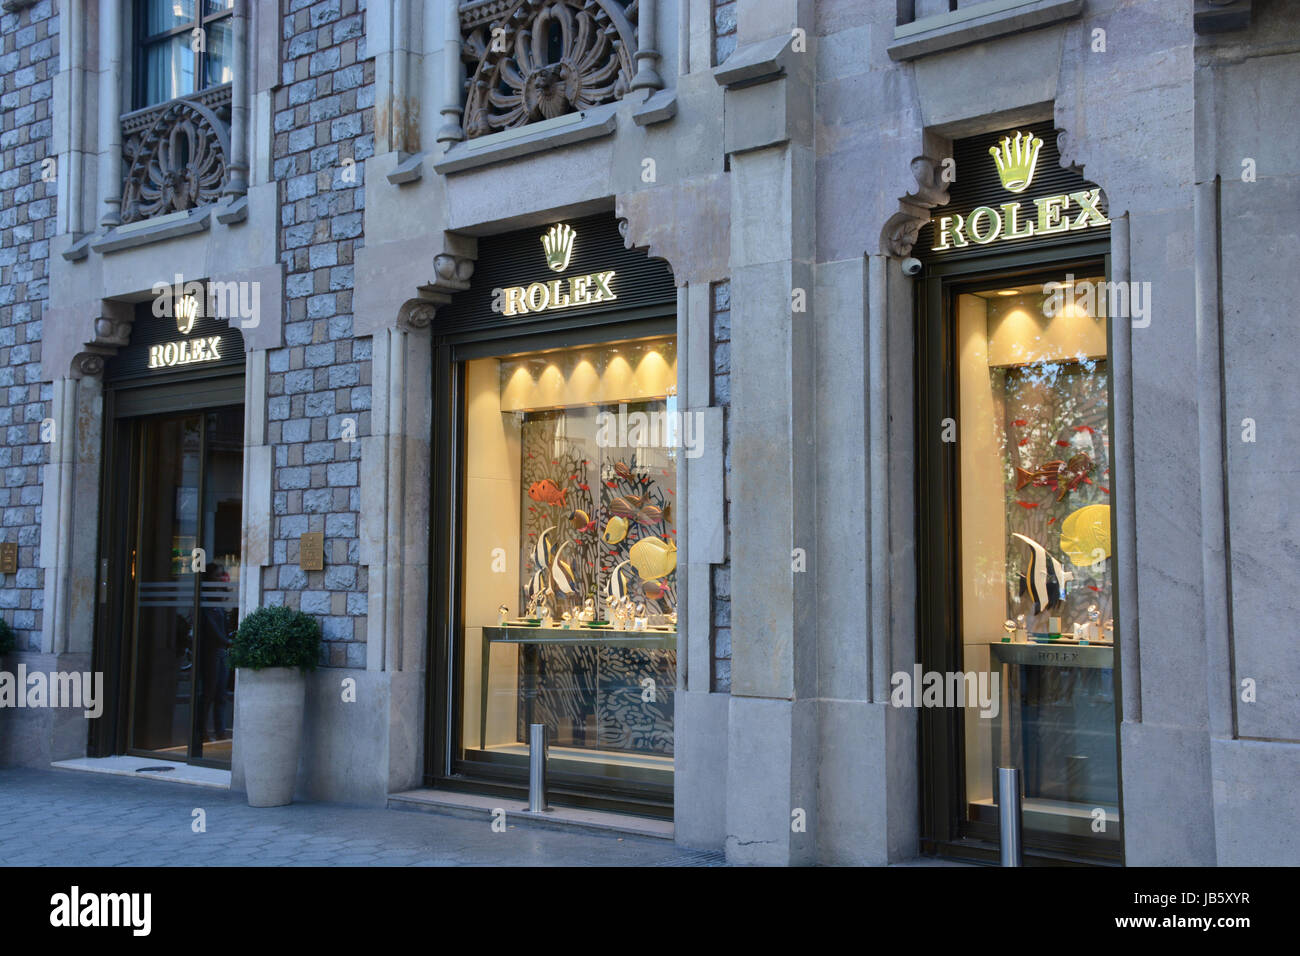 Rolex boutique Barcelona Spain Stock Photo - Alamy